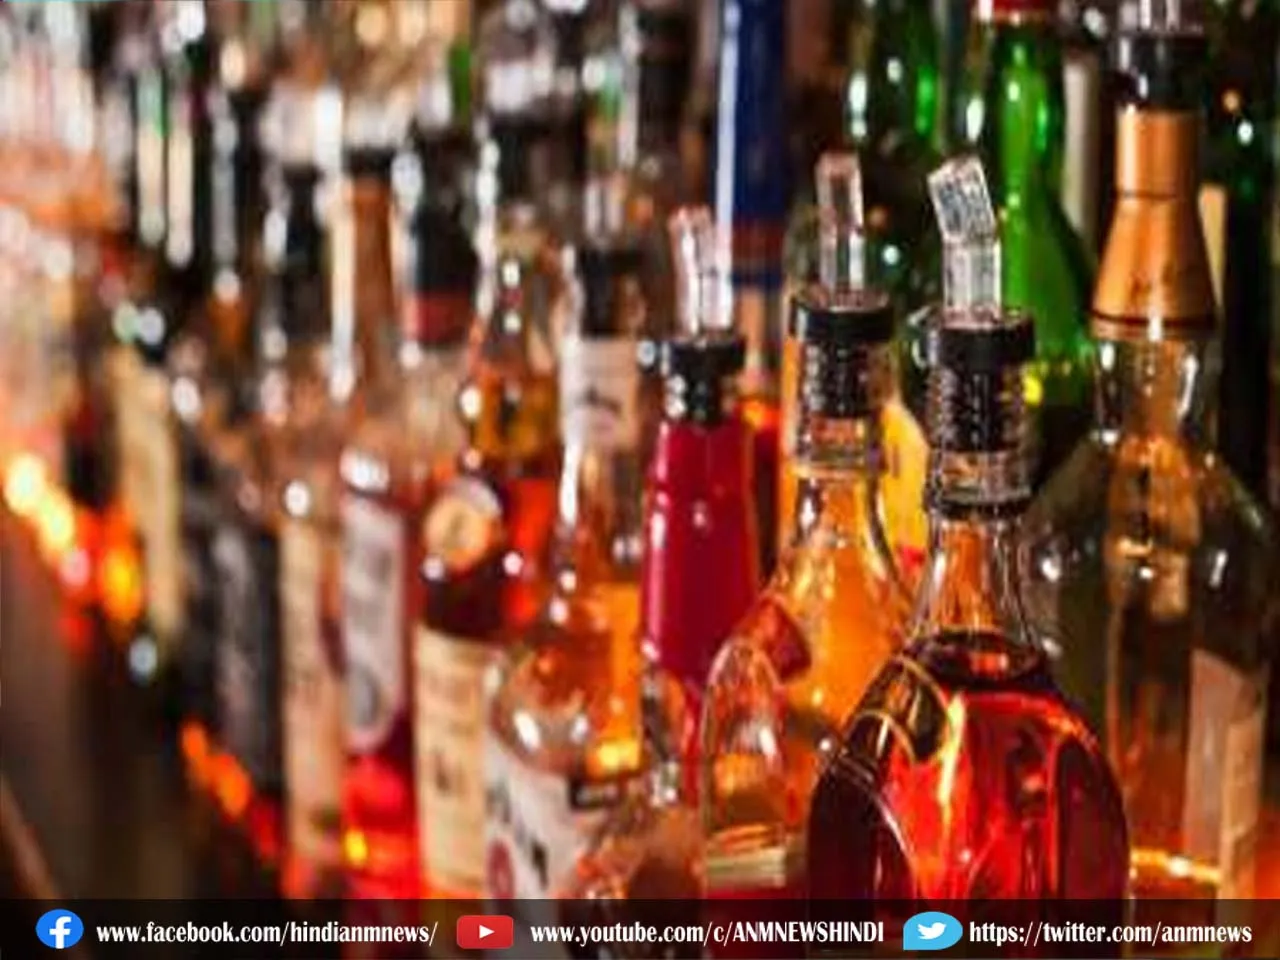 West Bengal: सैकड़ों लीटर अवैध देशी शराब जब्त